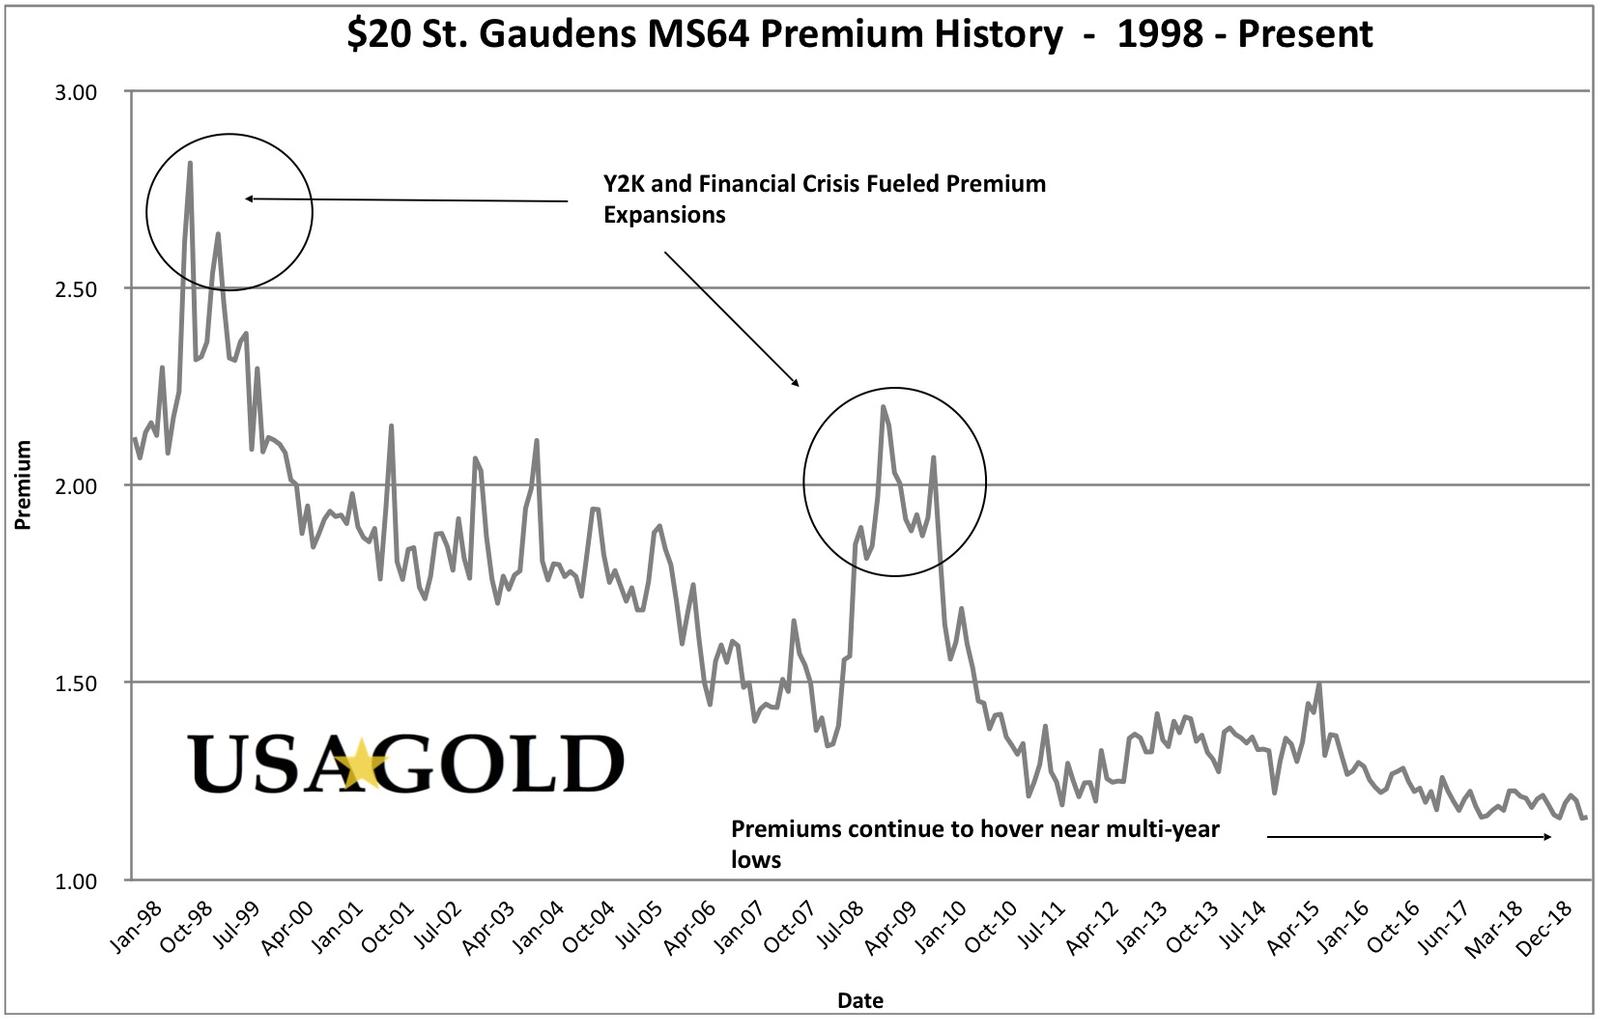 Line chart showing $20 St Gaudens MS premium history